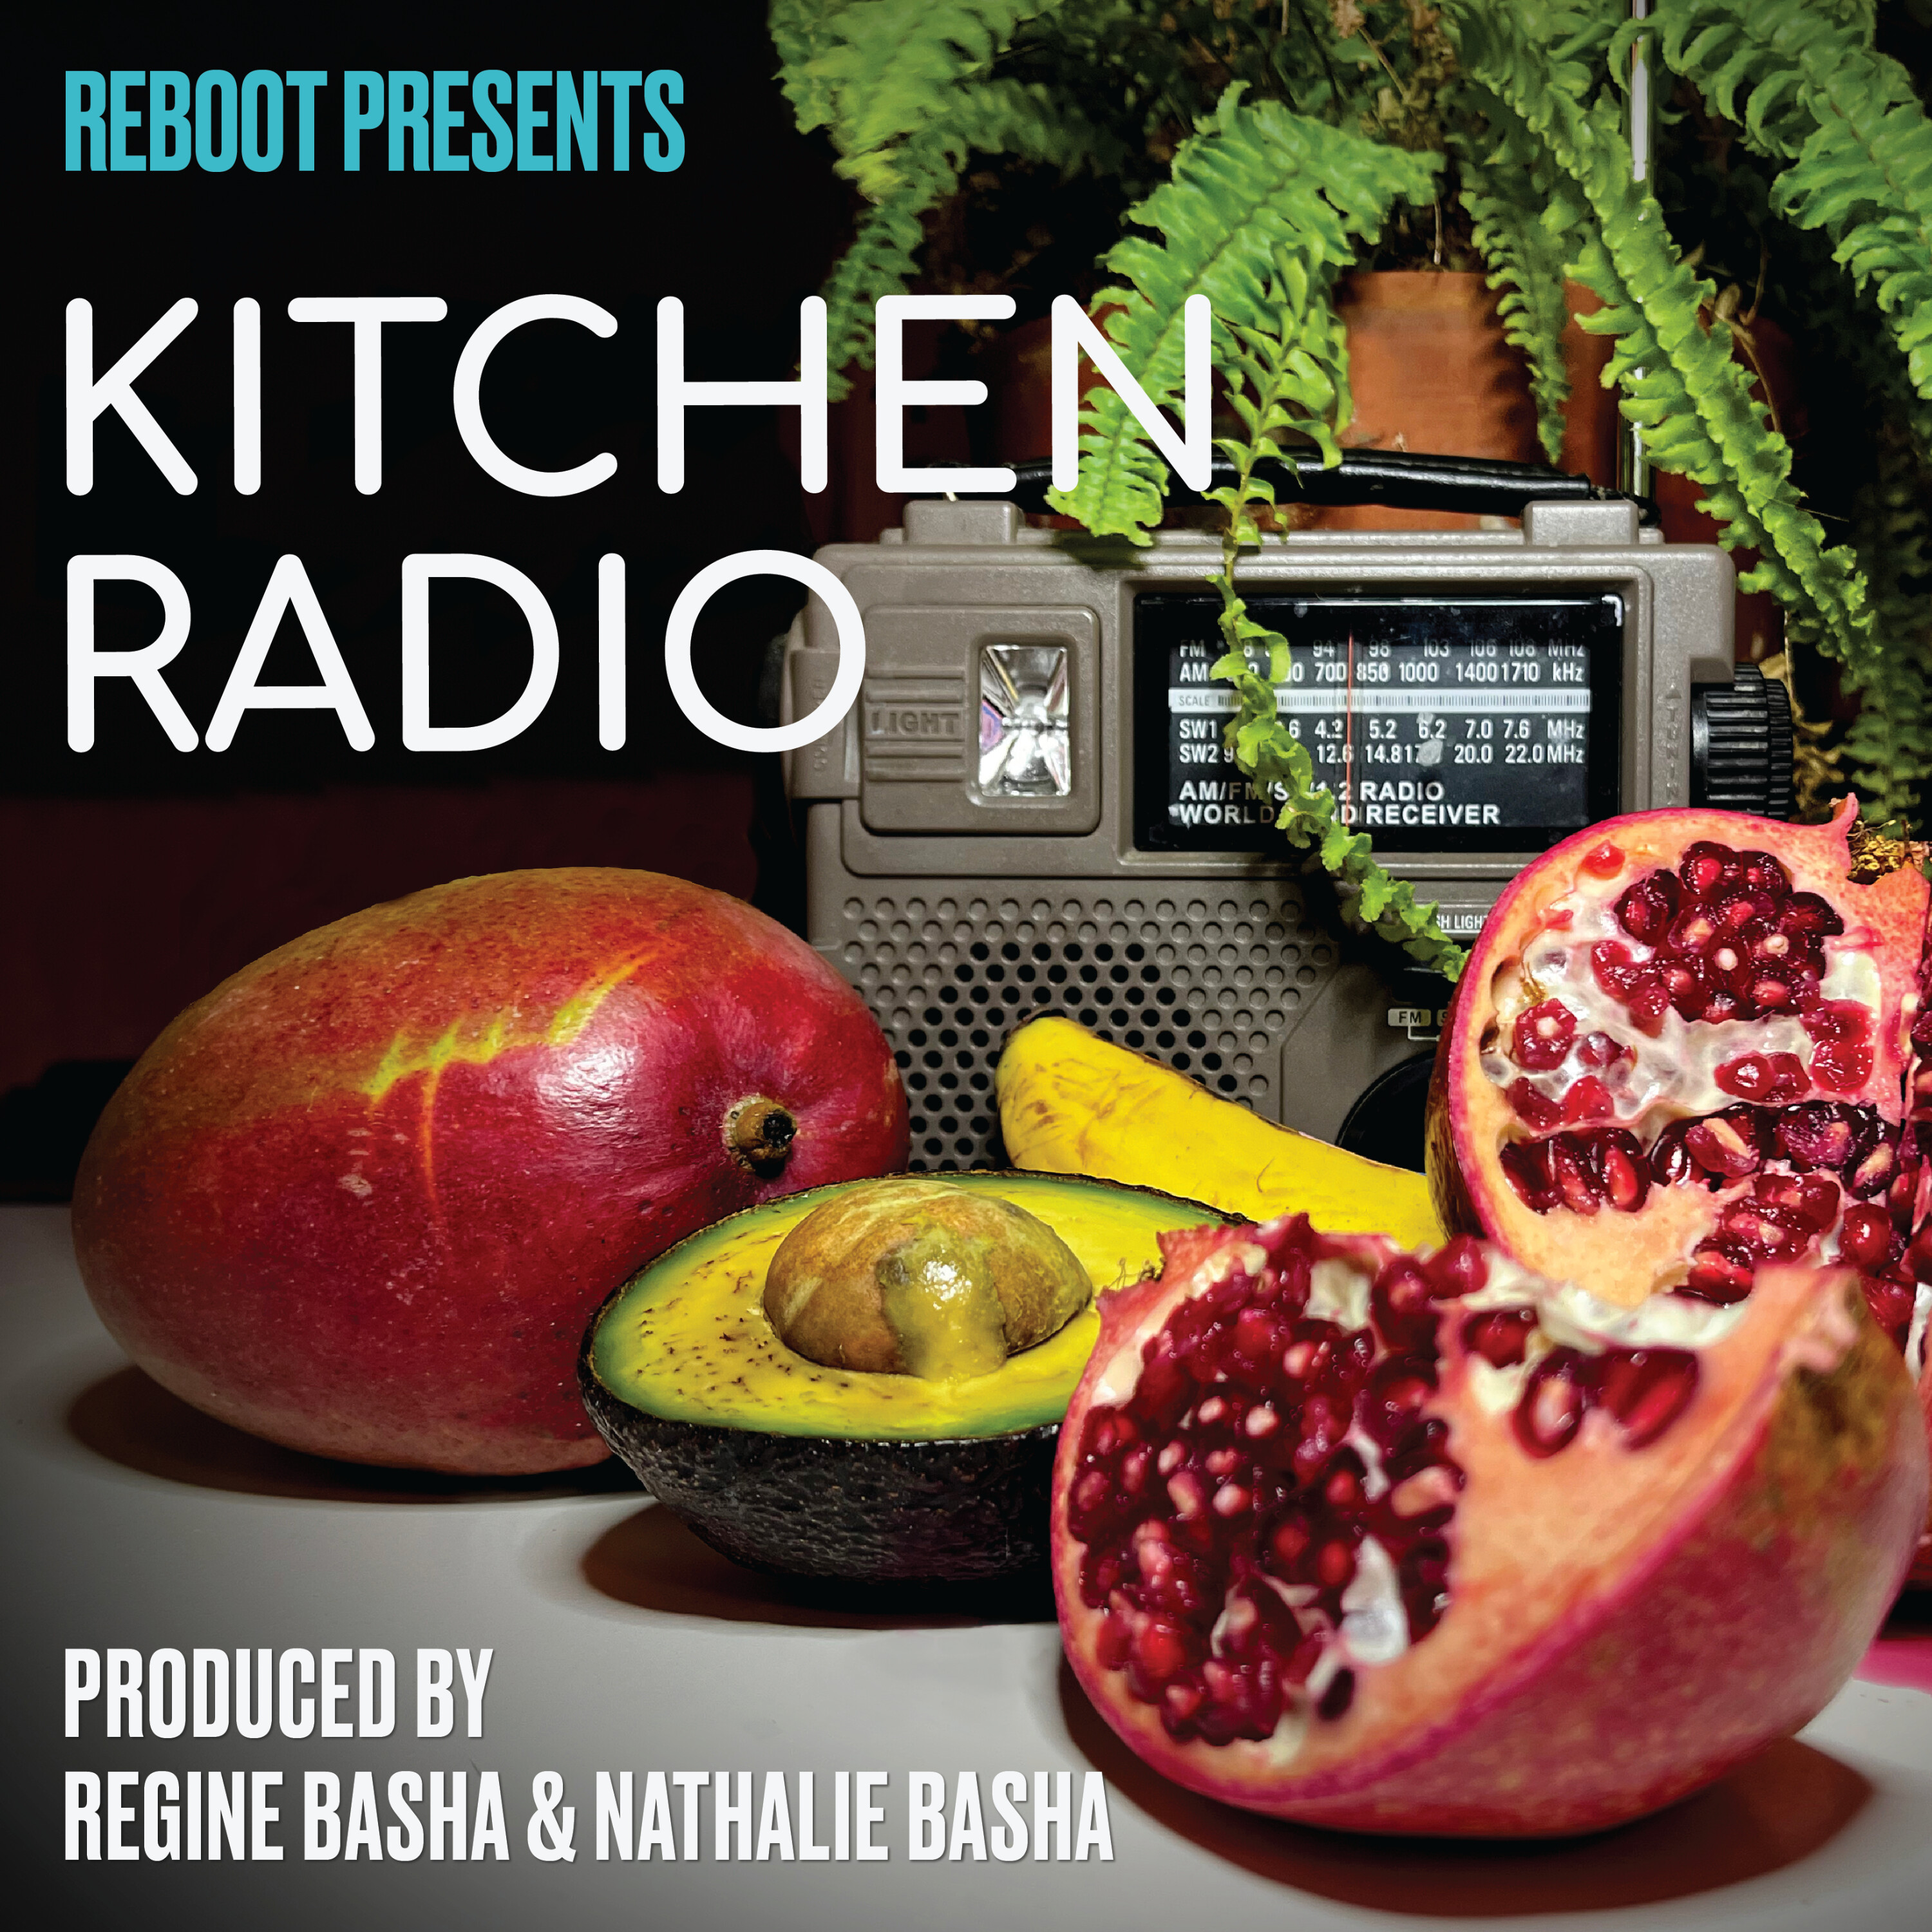 Kitchen Radio - Konafa a la Creme with Claudia Roden